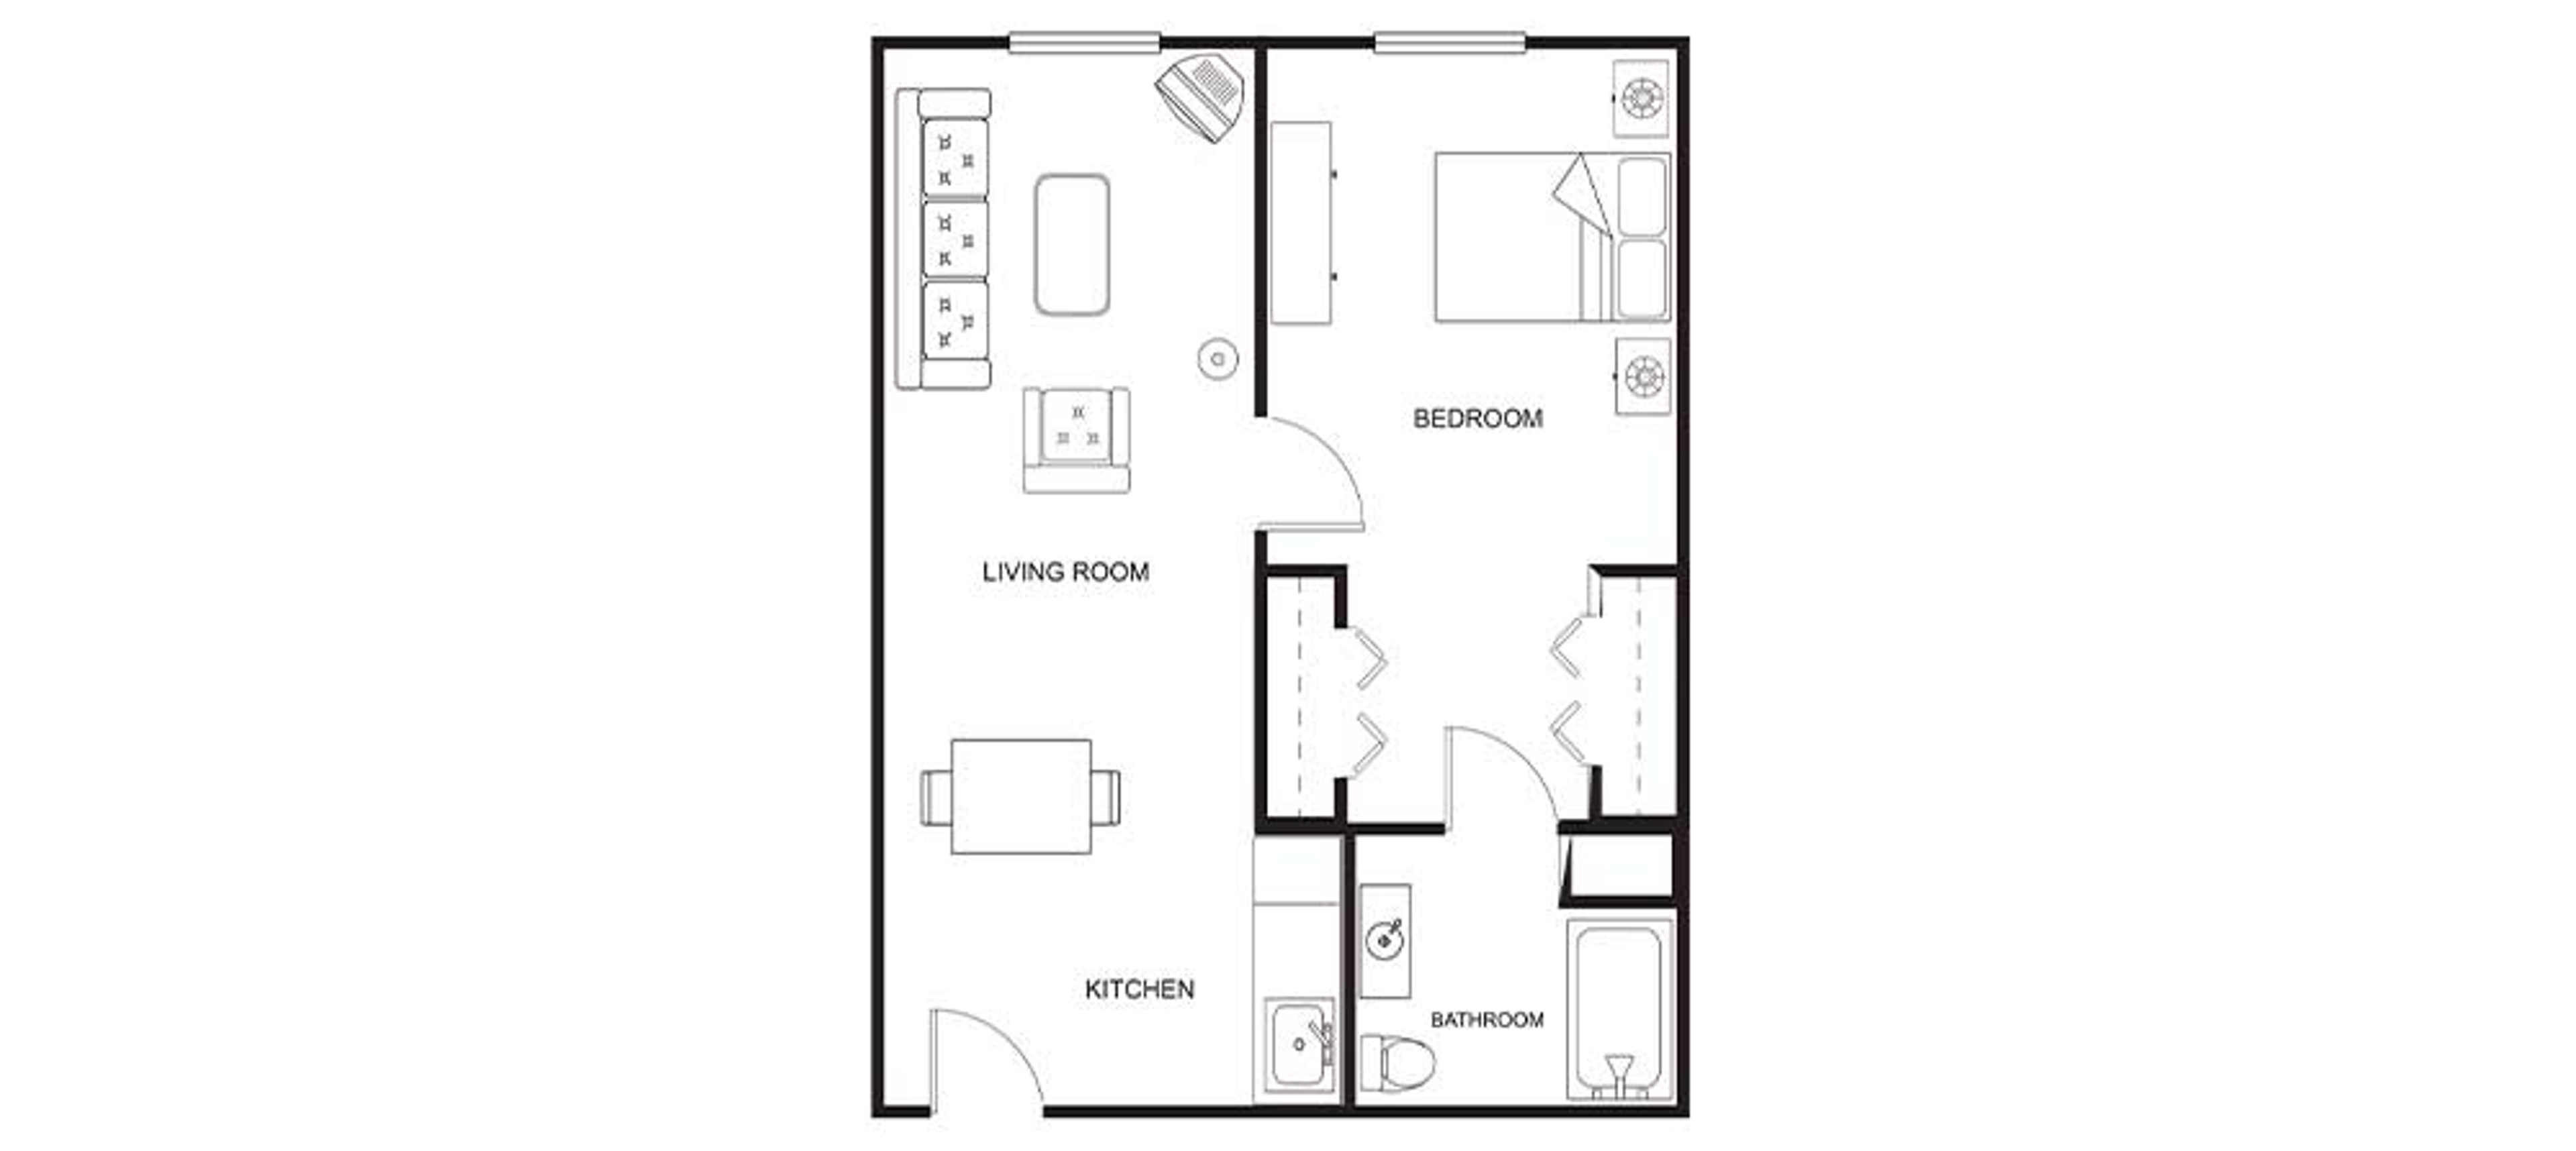 Floorplan - Bay Side Terrace - 1B 1B B3 Assisted Living